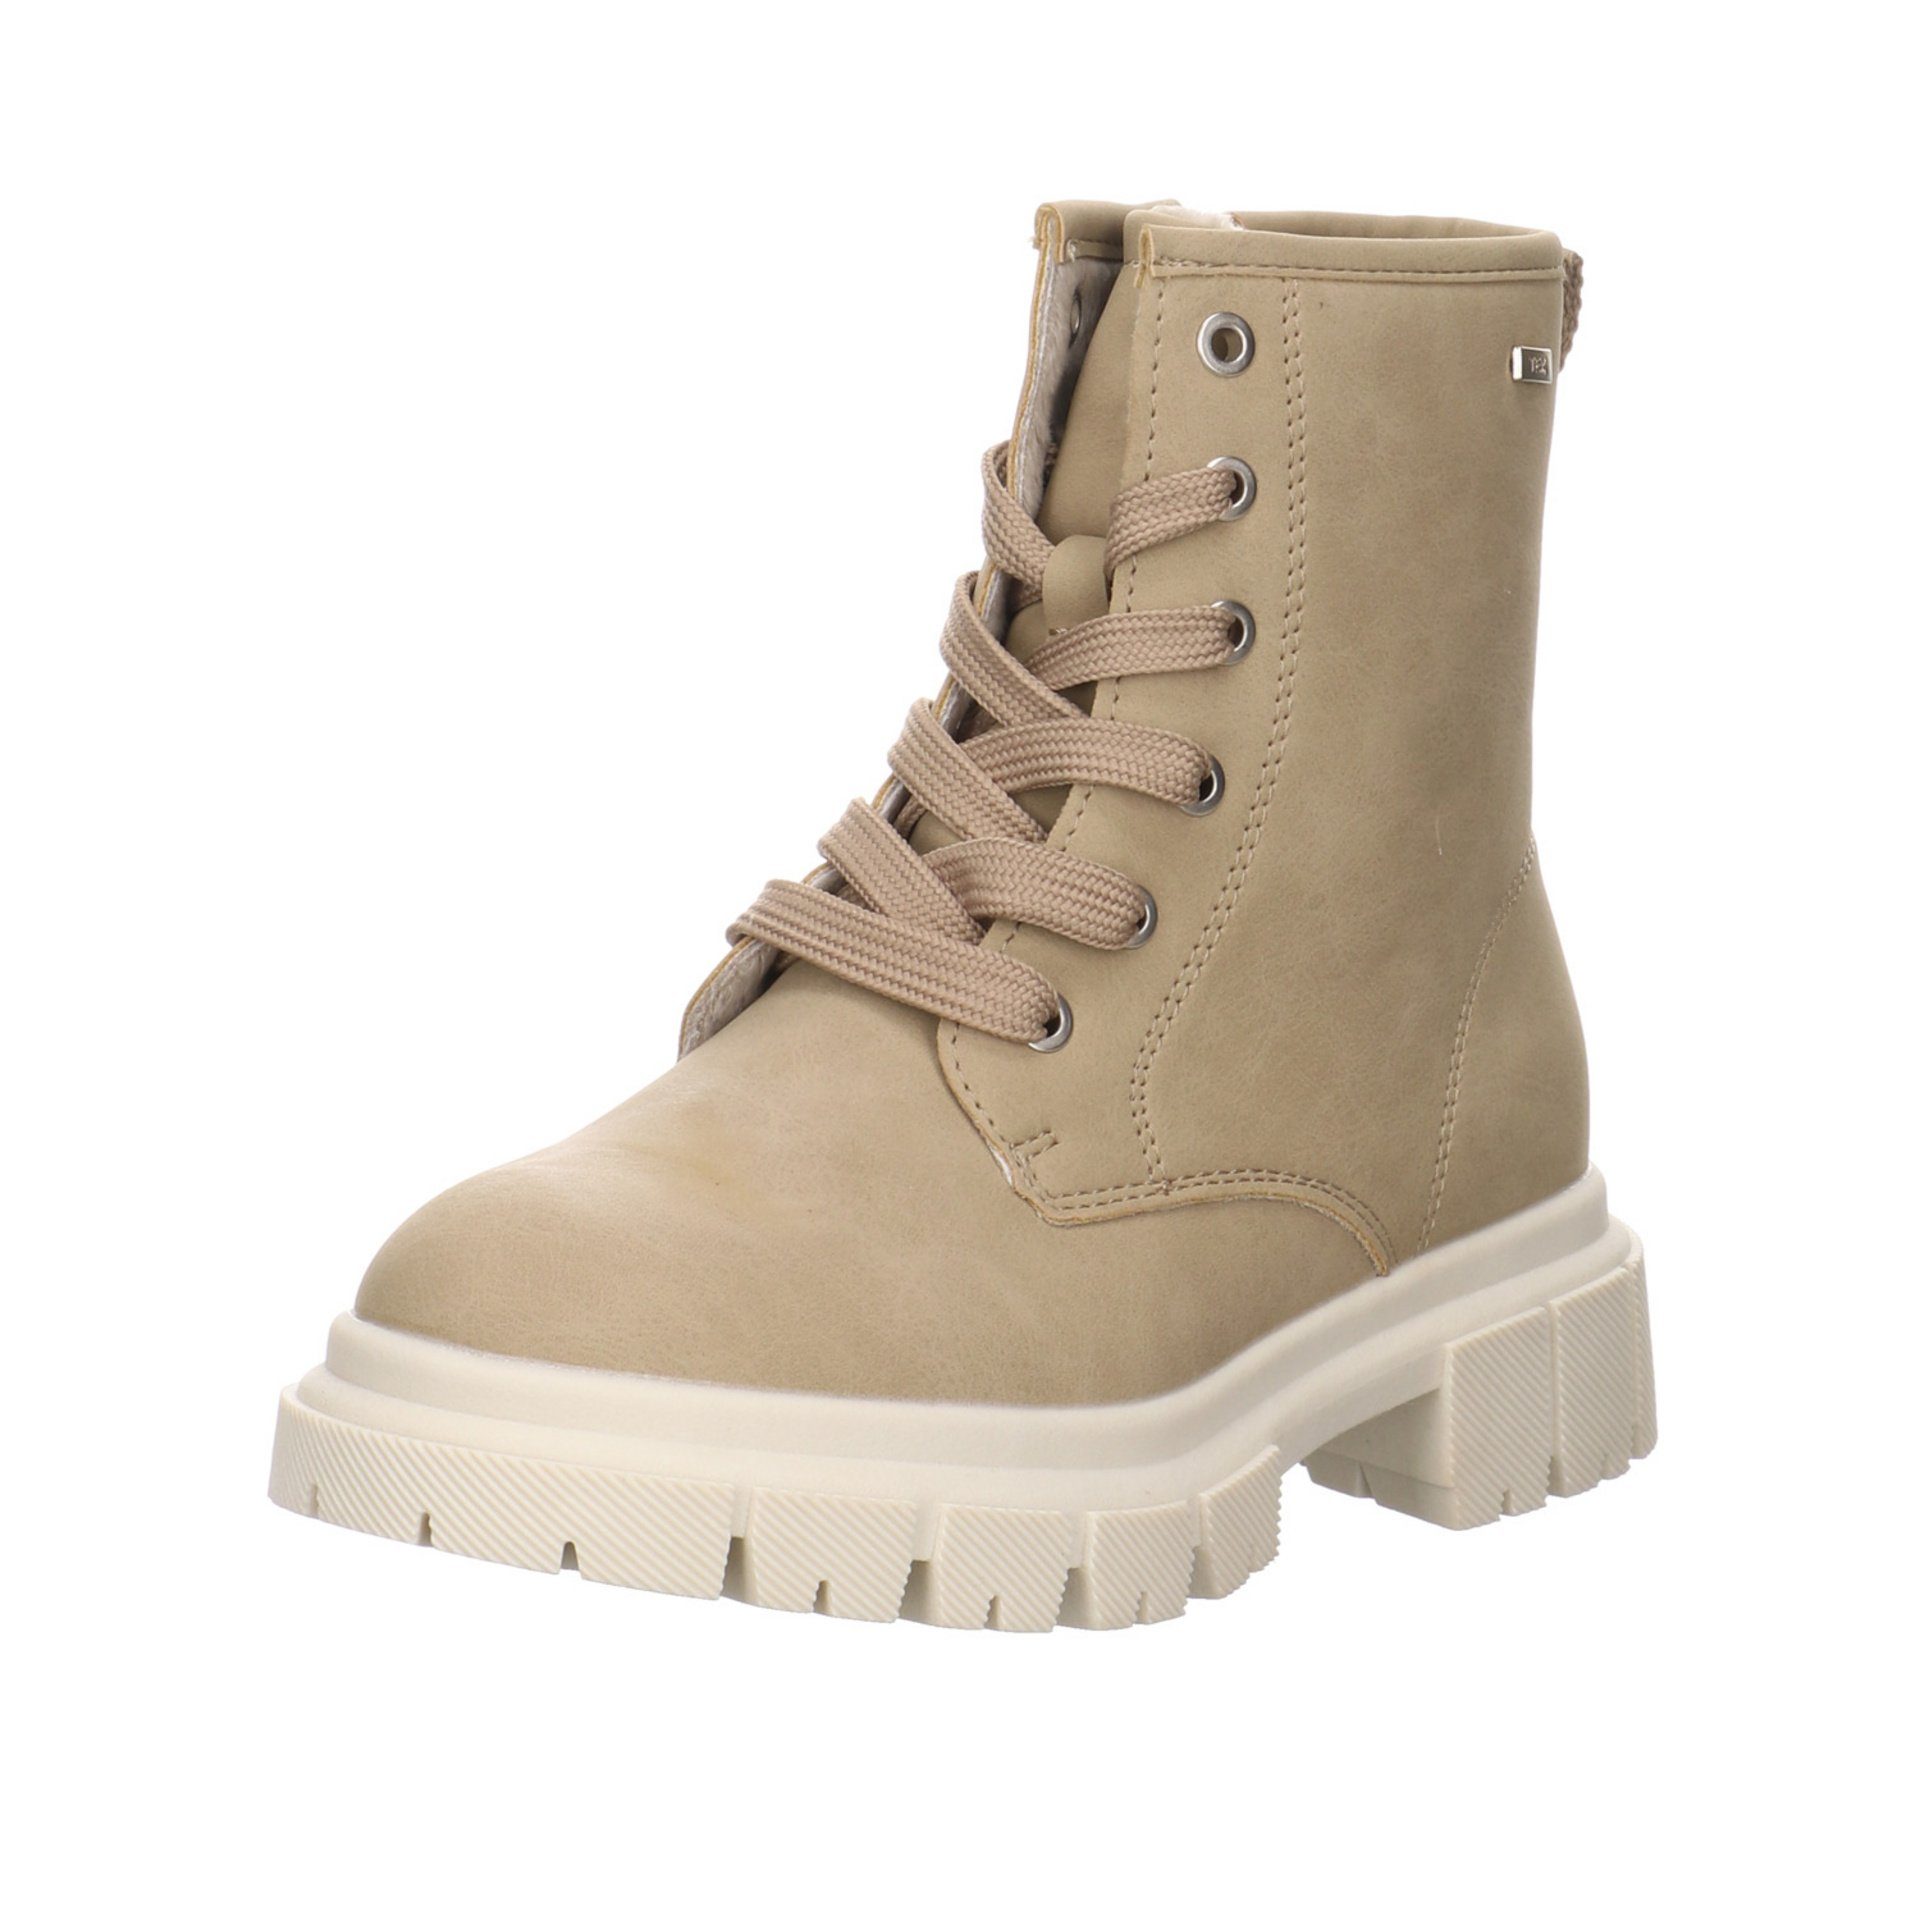 Hochwertiges Material TOM TAILOR Boots Stiefelette Kinderschuhe Mädchen Synthetik Schuhe beige Stiefel